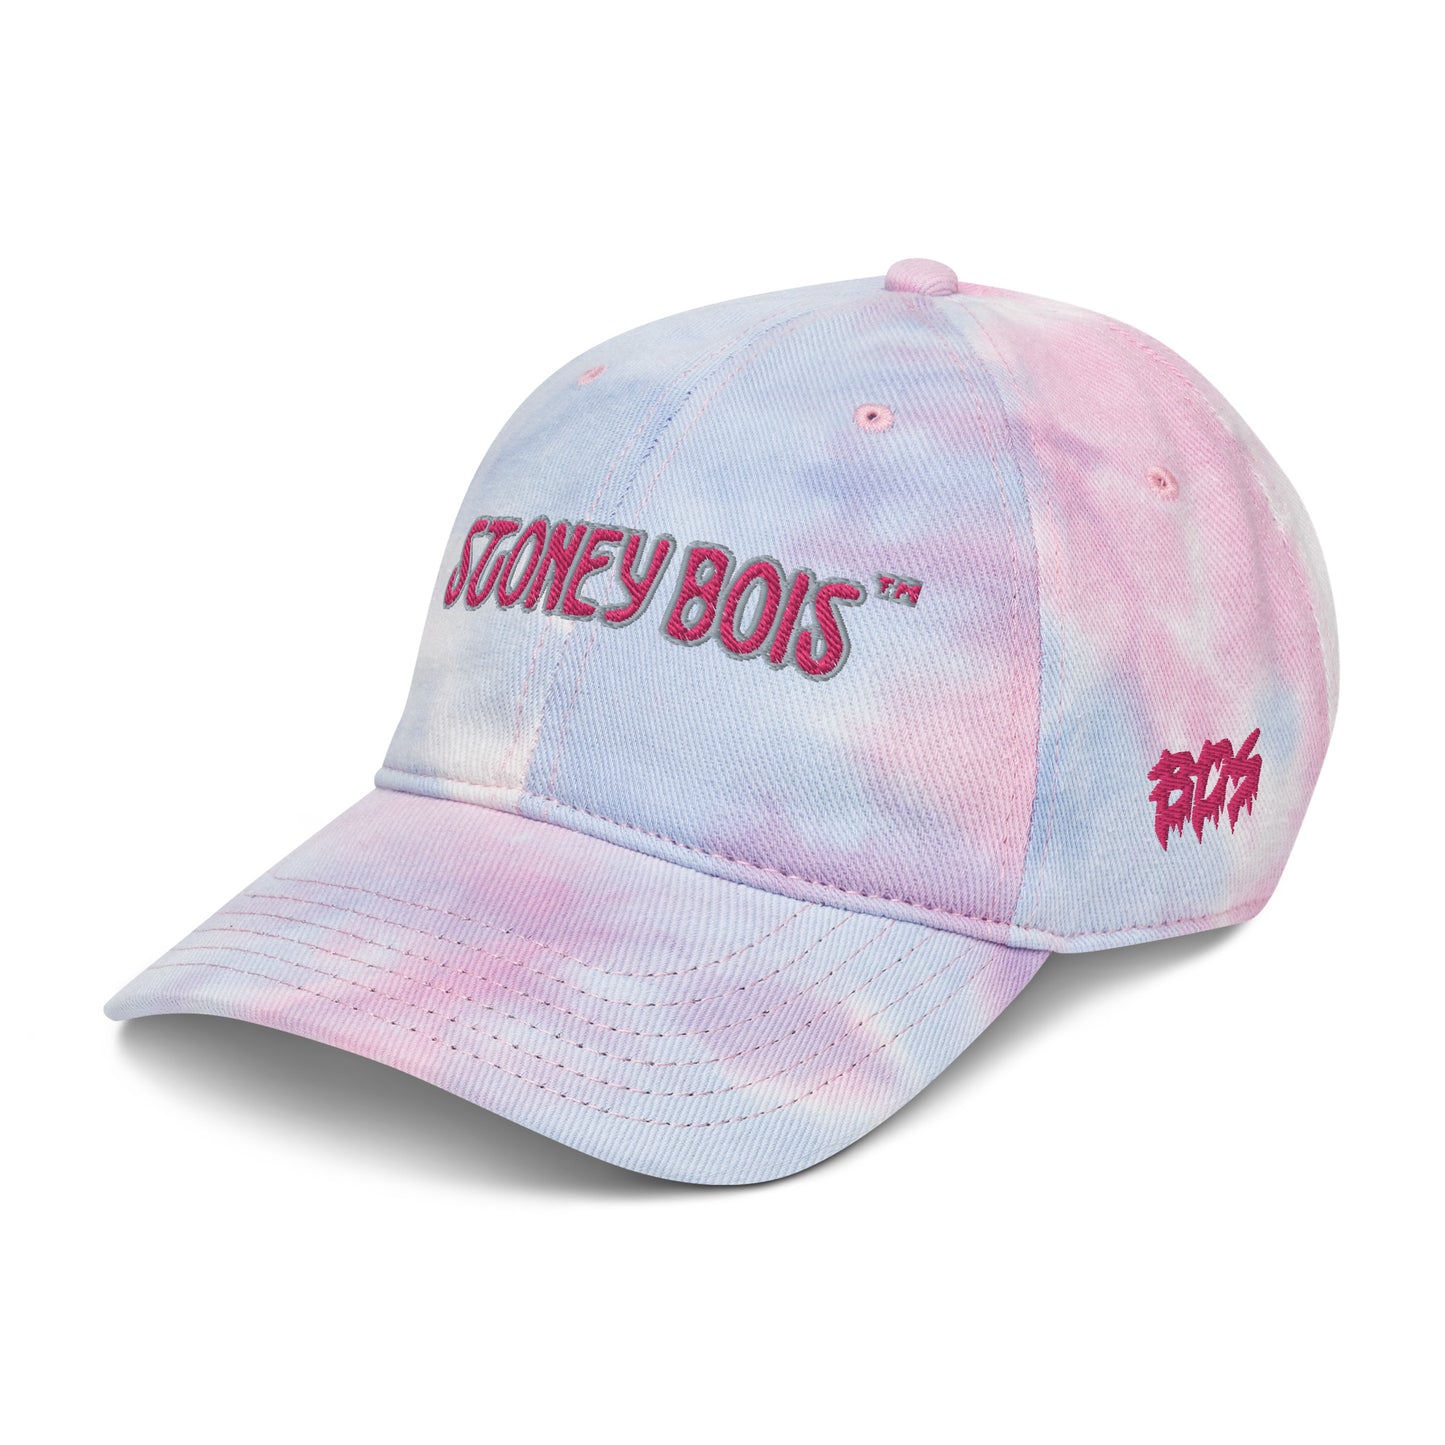 StoneyBois™ Tie dye hat